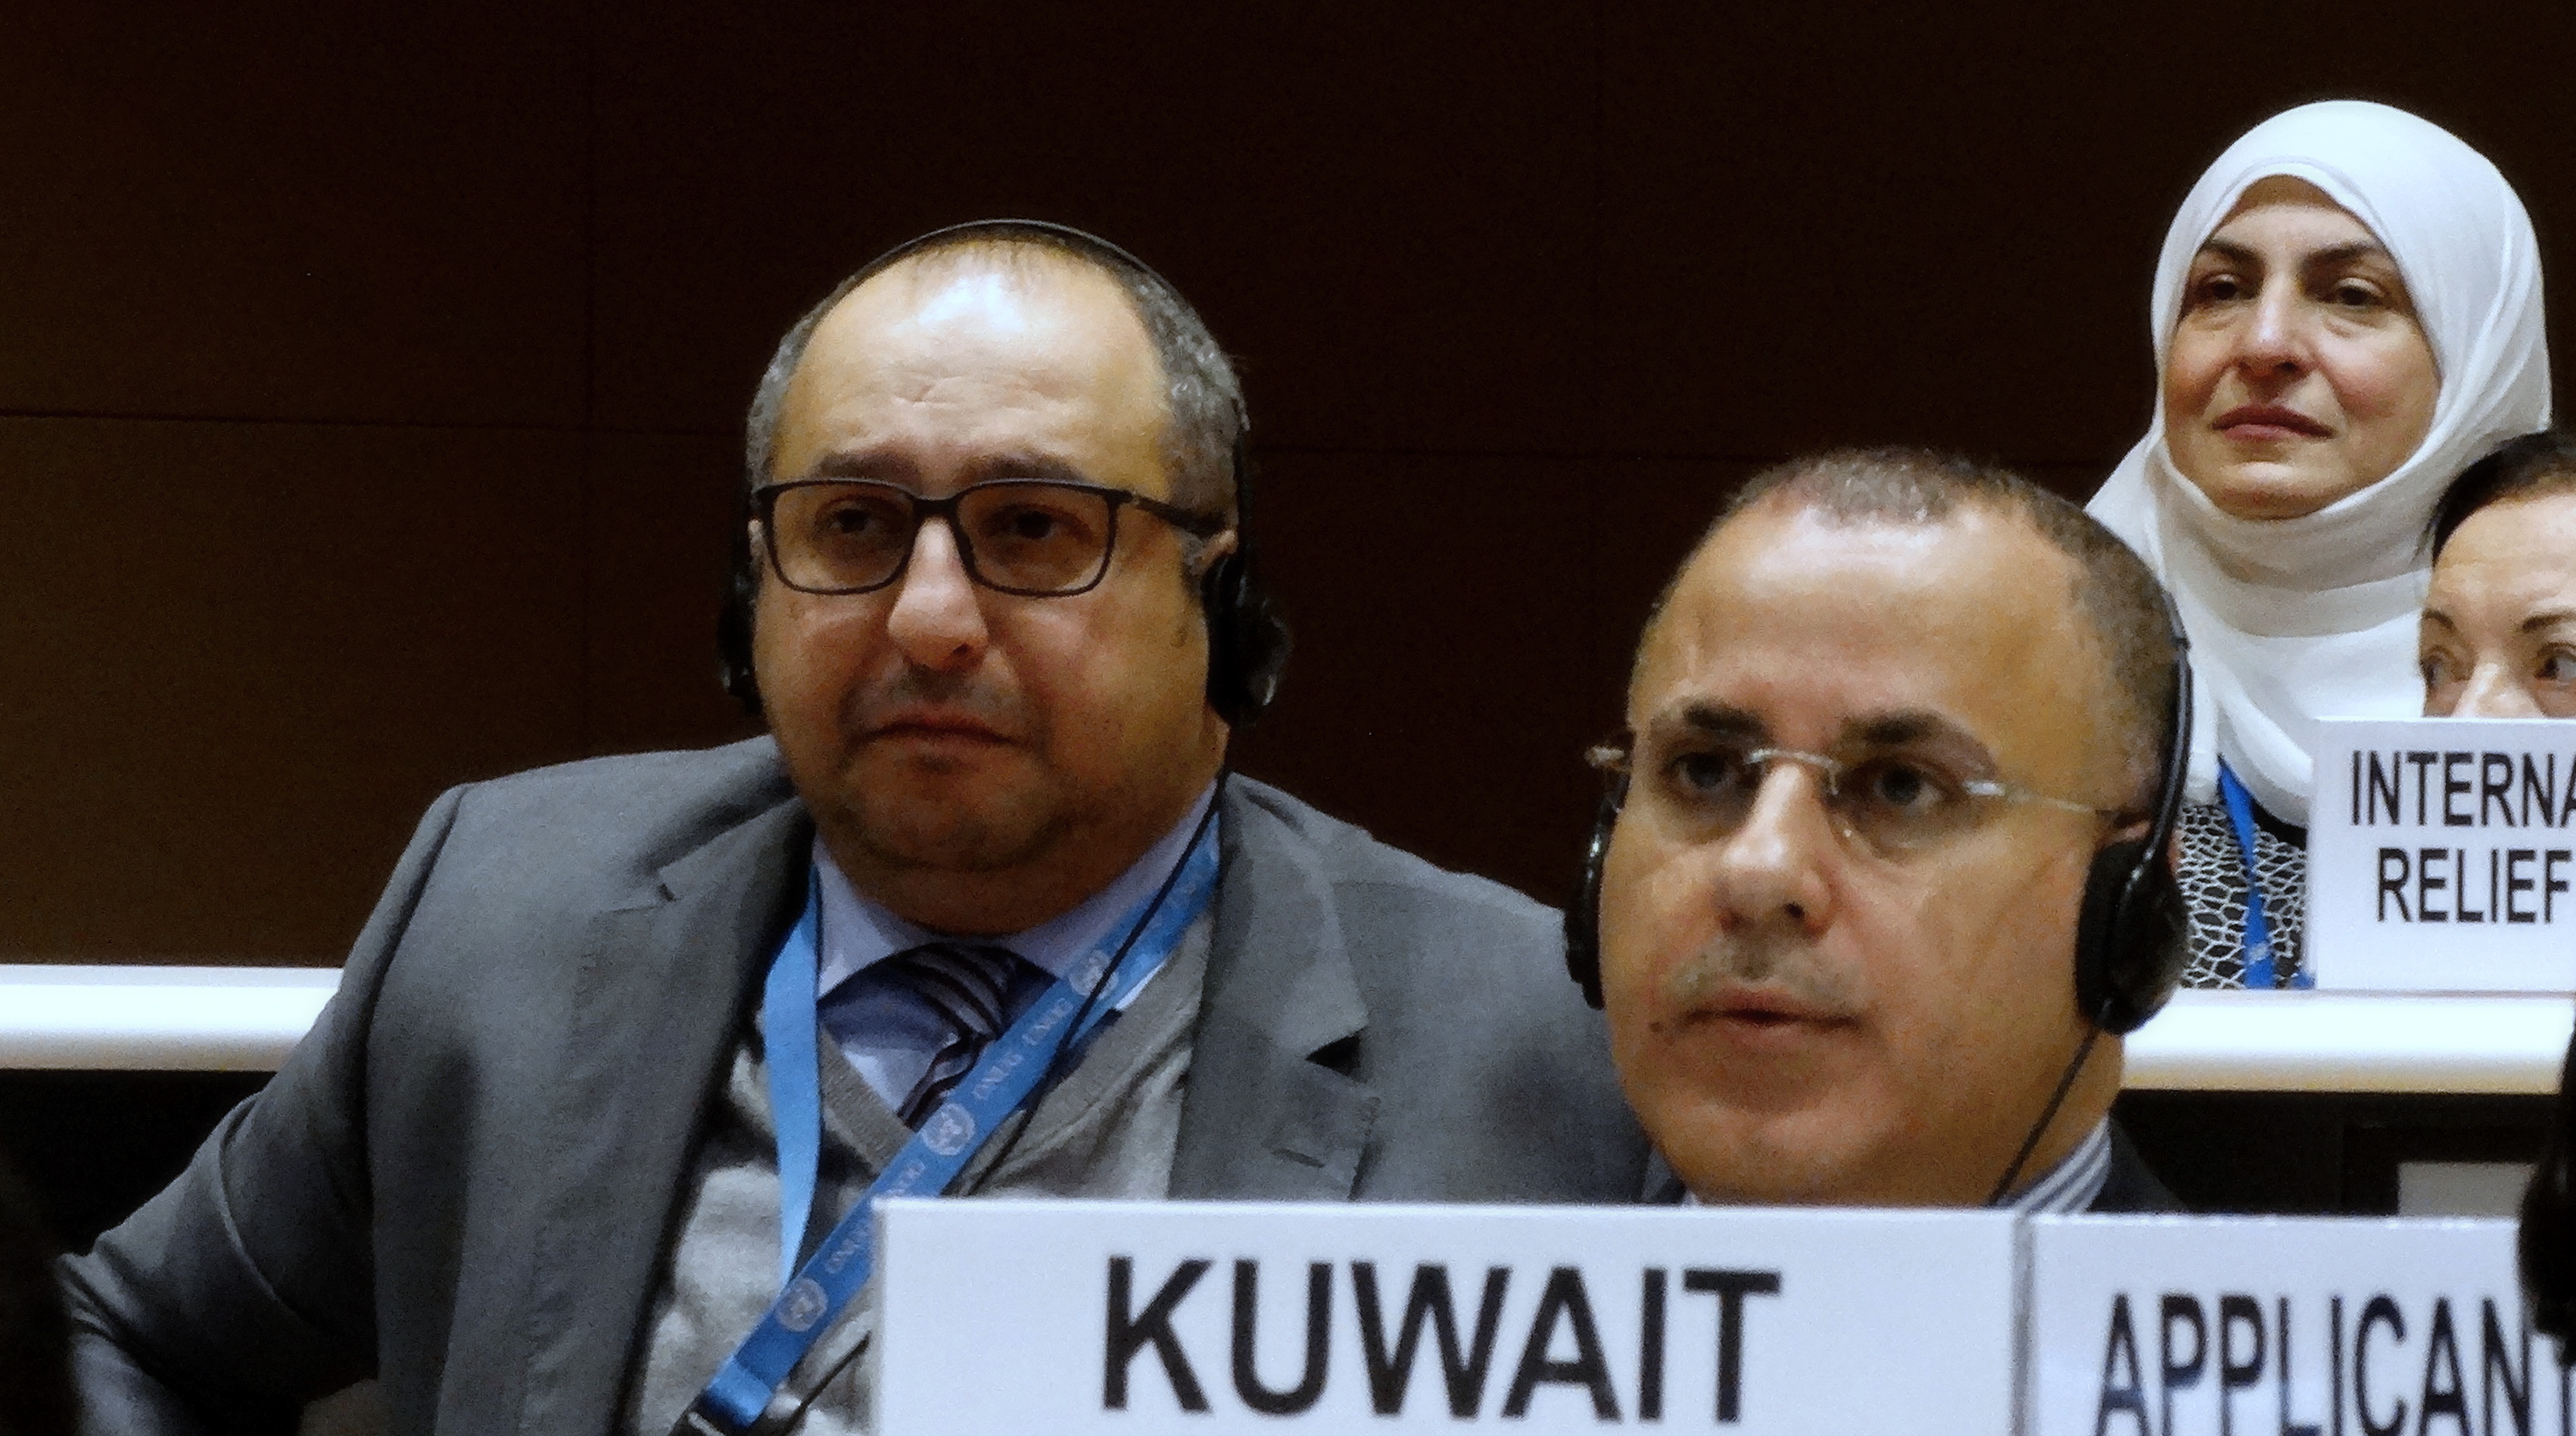 Kuwait's permanent delegate to the UN Jamal Al-Ghunaim